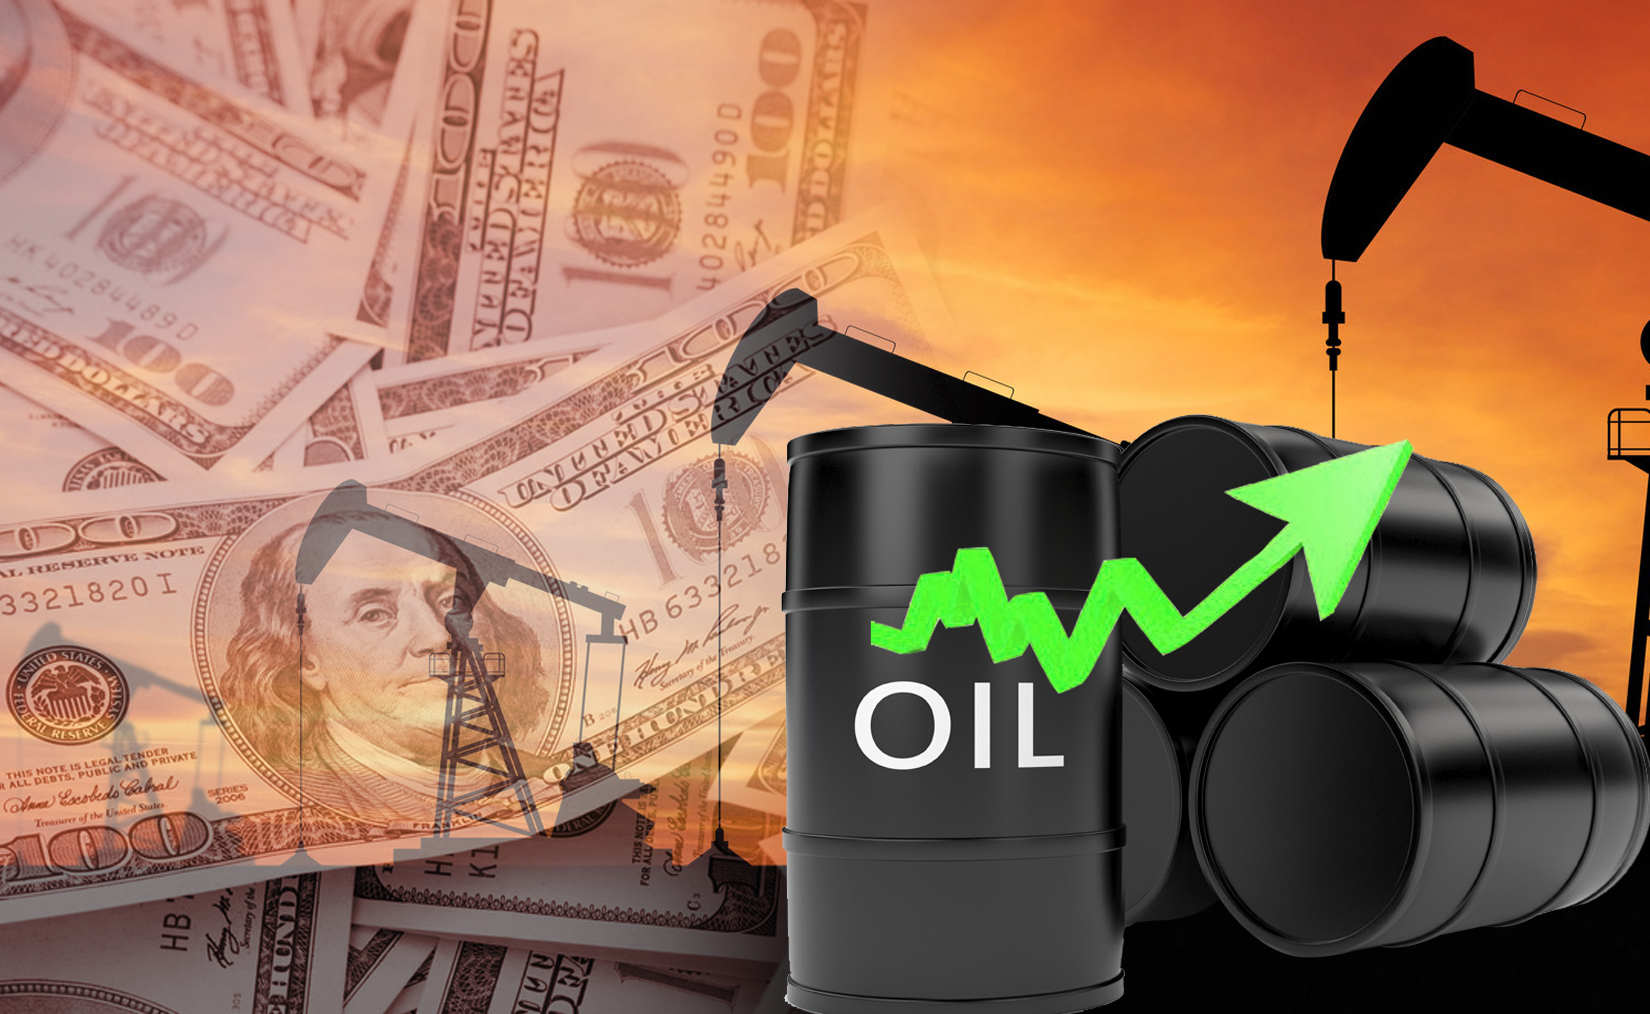 Kuwait oil gains 99 cents to USD 40.41 pb - KPC                                                                                                                                                                                                           